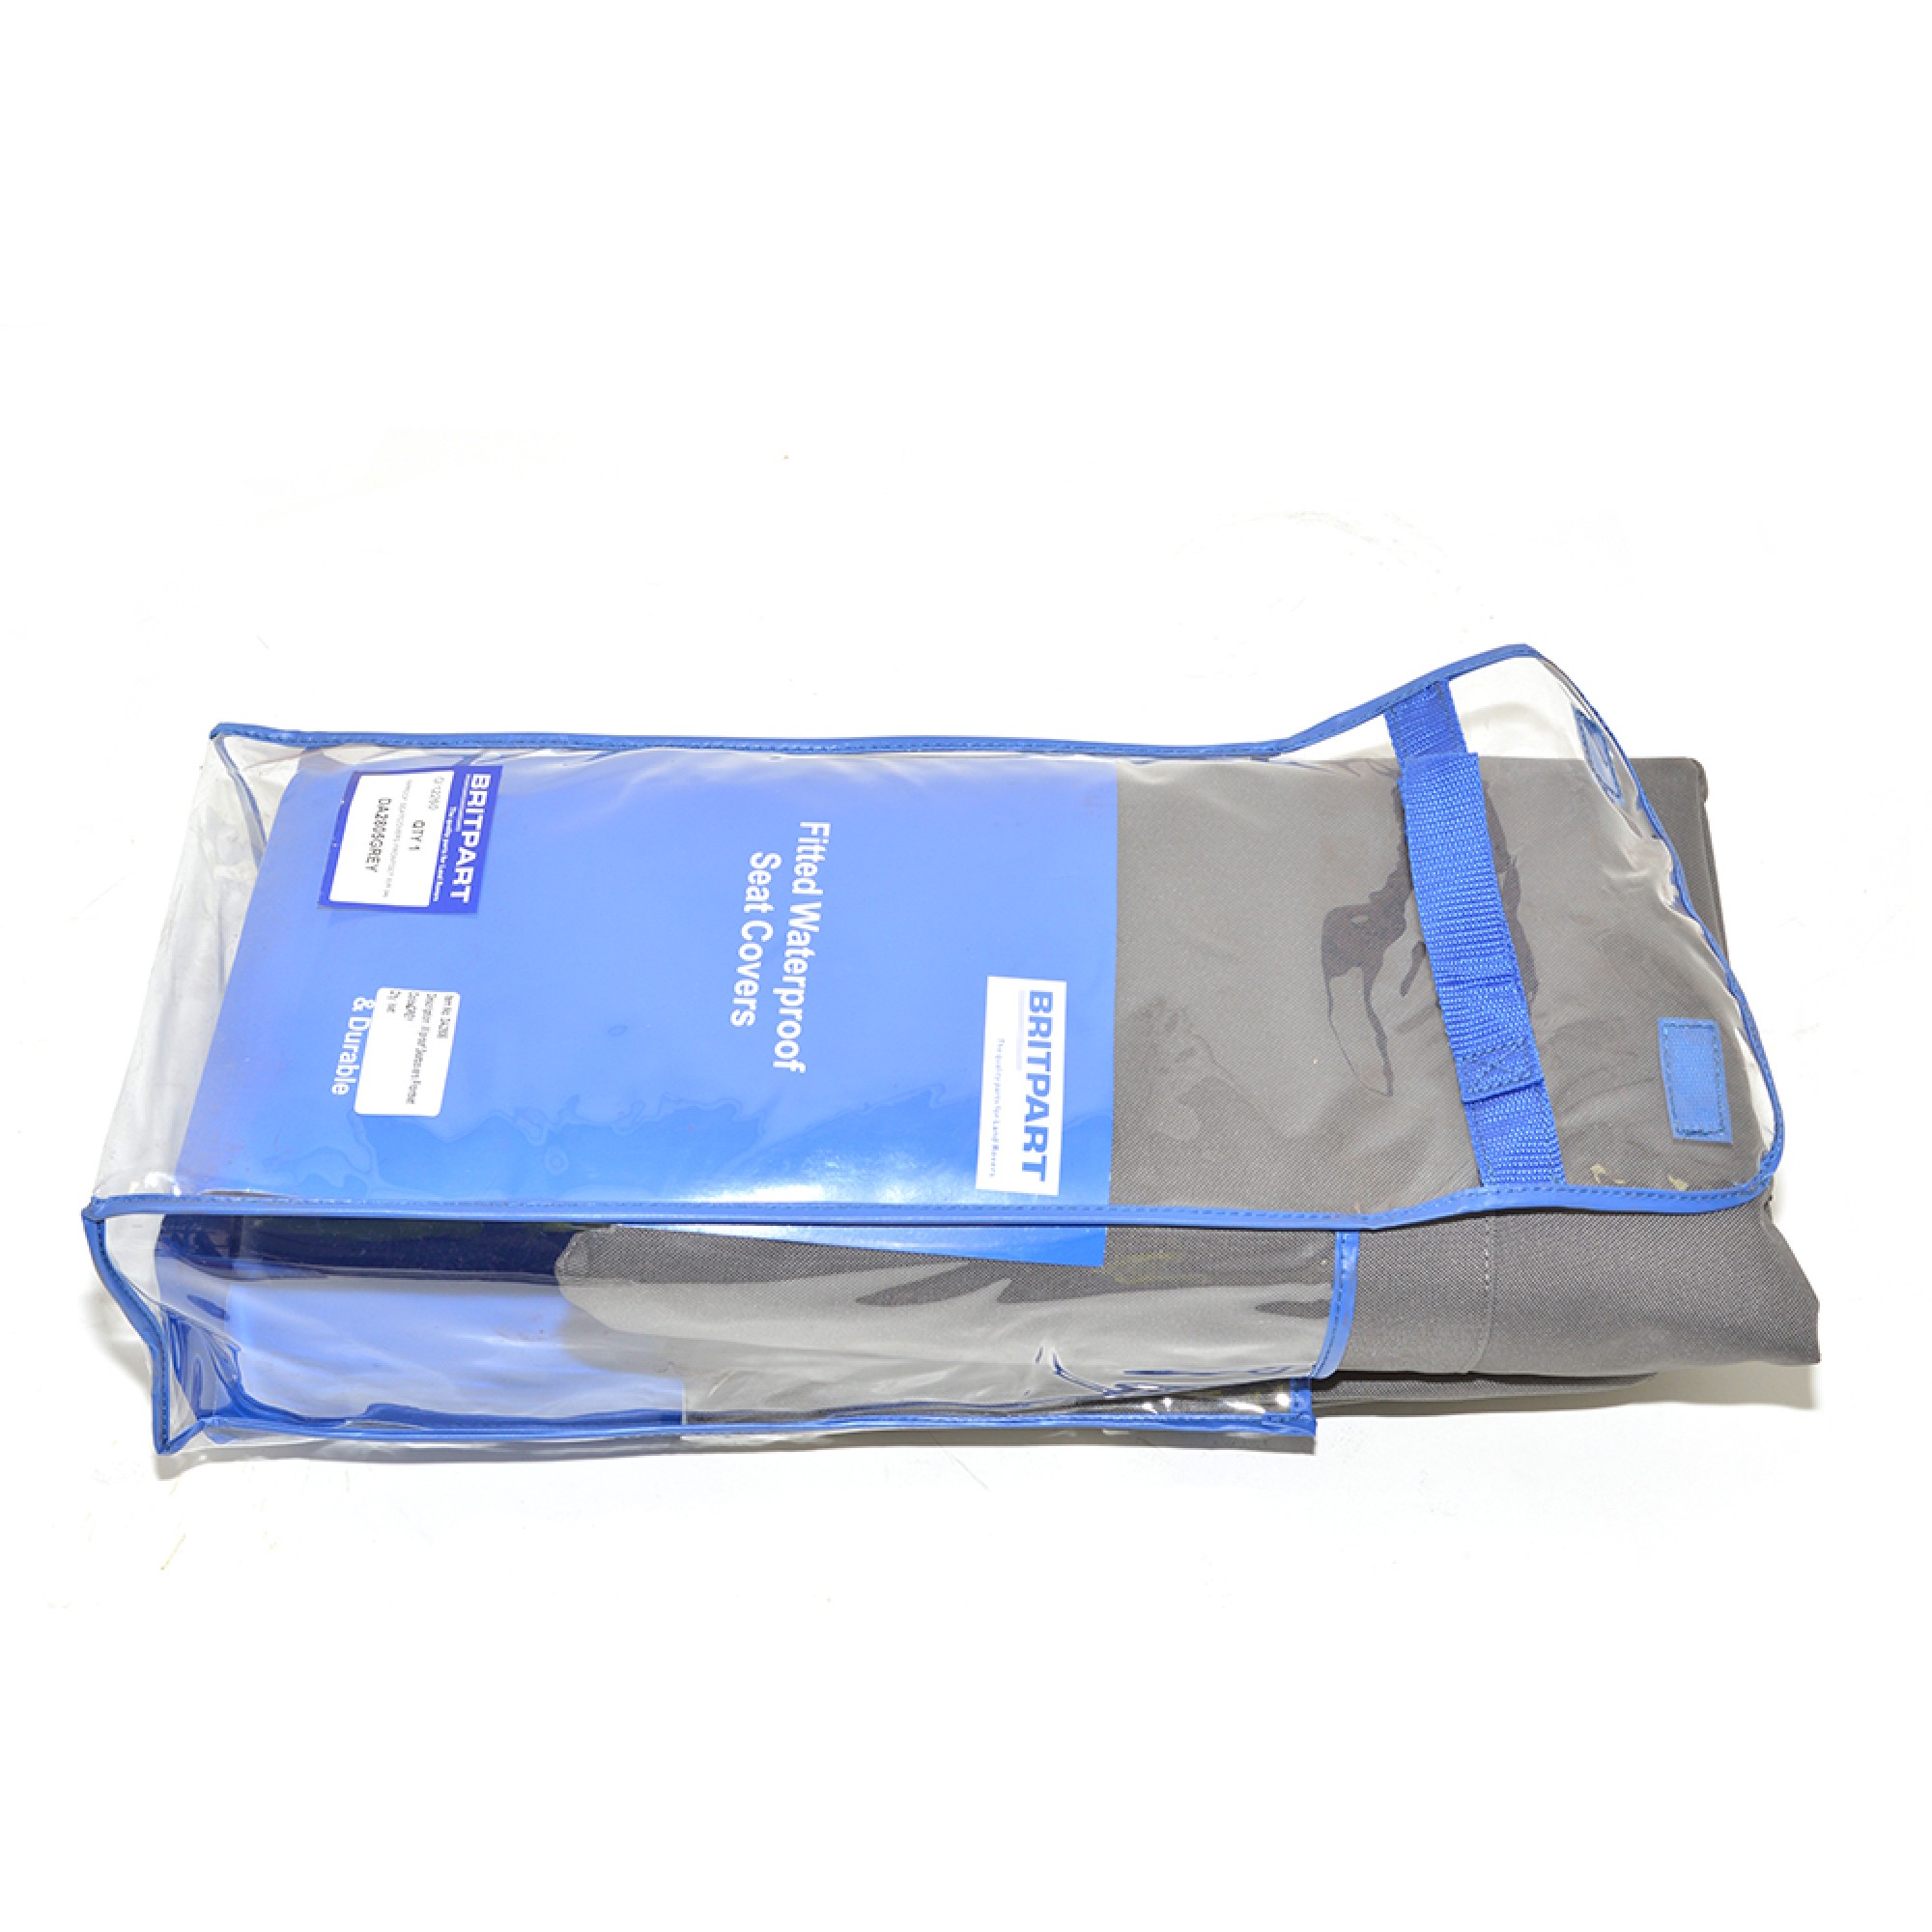 DriSeats Waterproof Seat Belt Covers (2 pack) – Dri Seats®